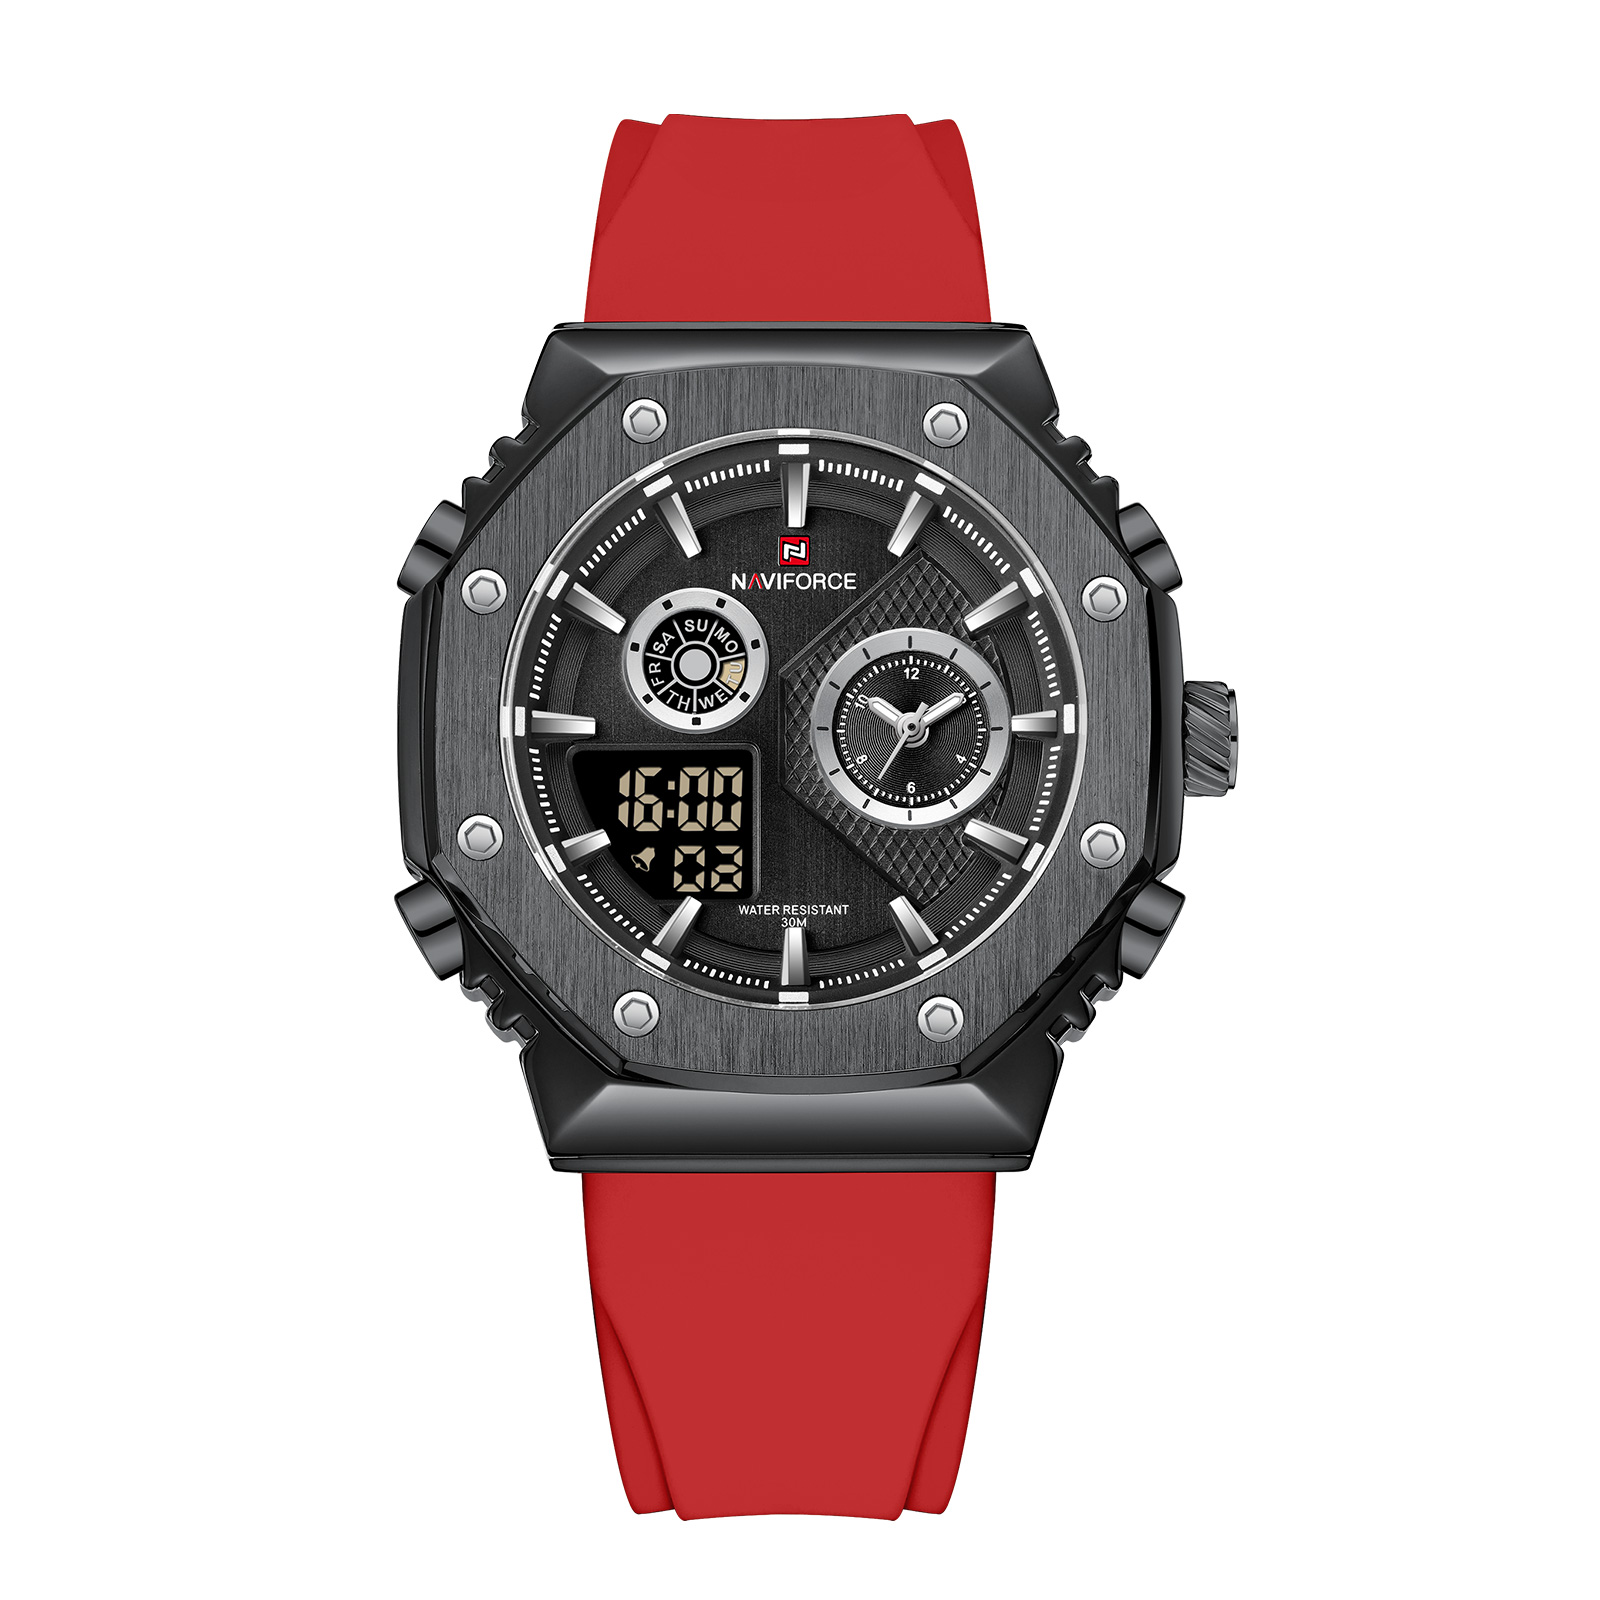 NAVIFORCE NF8036 Sports Quartz Watch Chronograph Date Waterproof Silicone Strap Men’s Watch